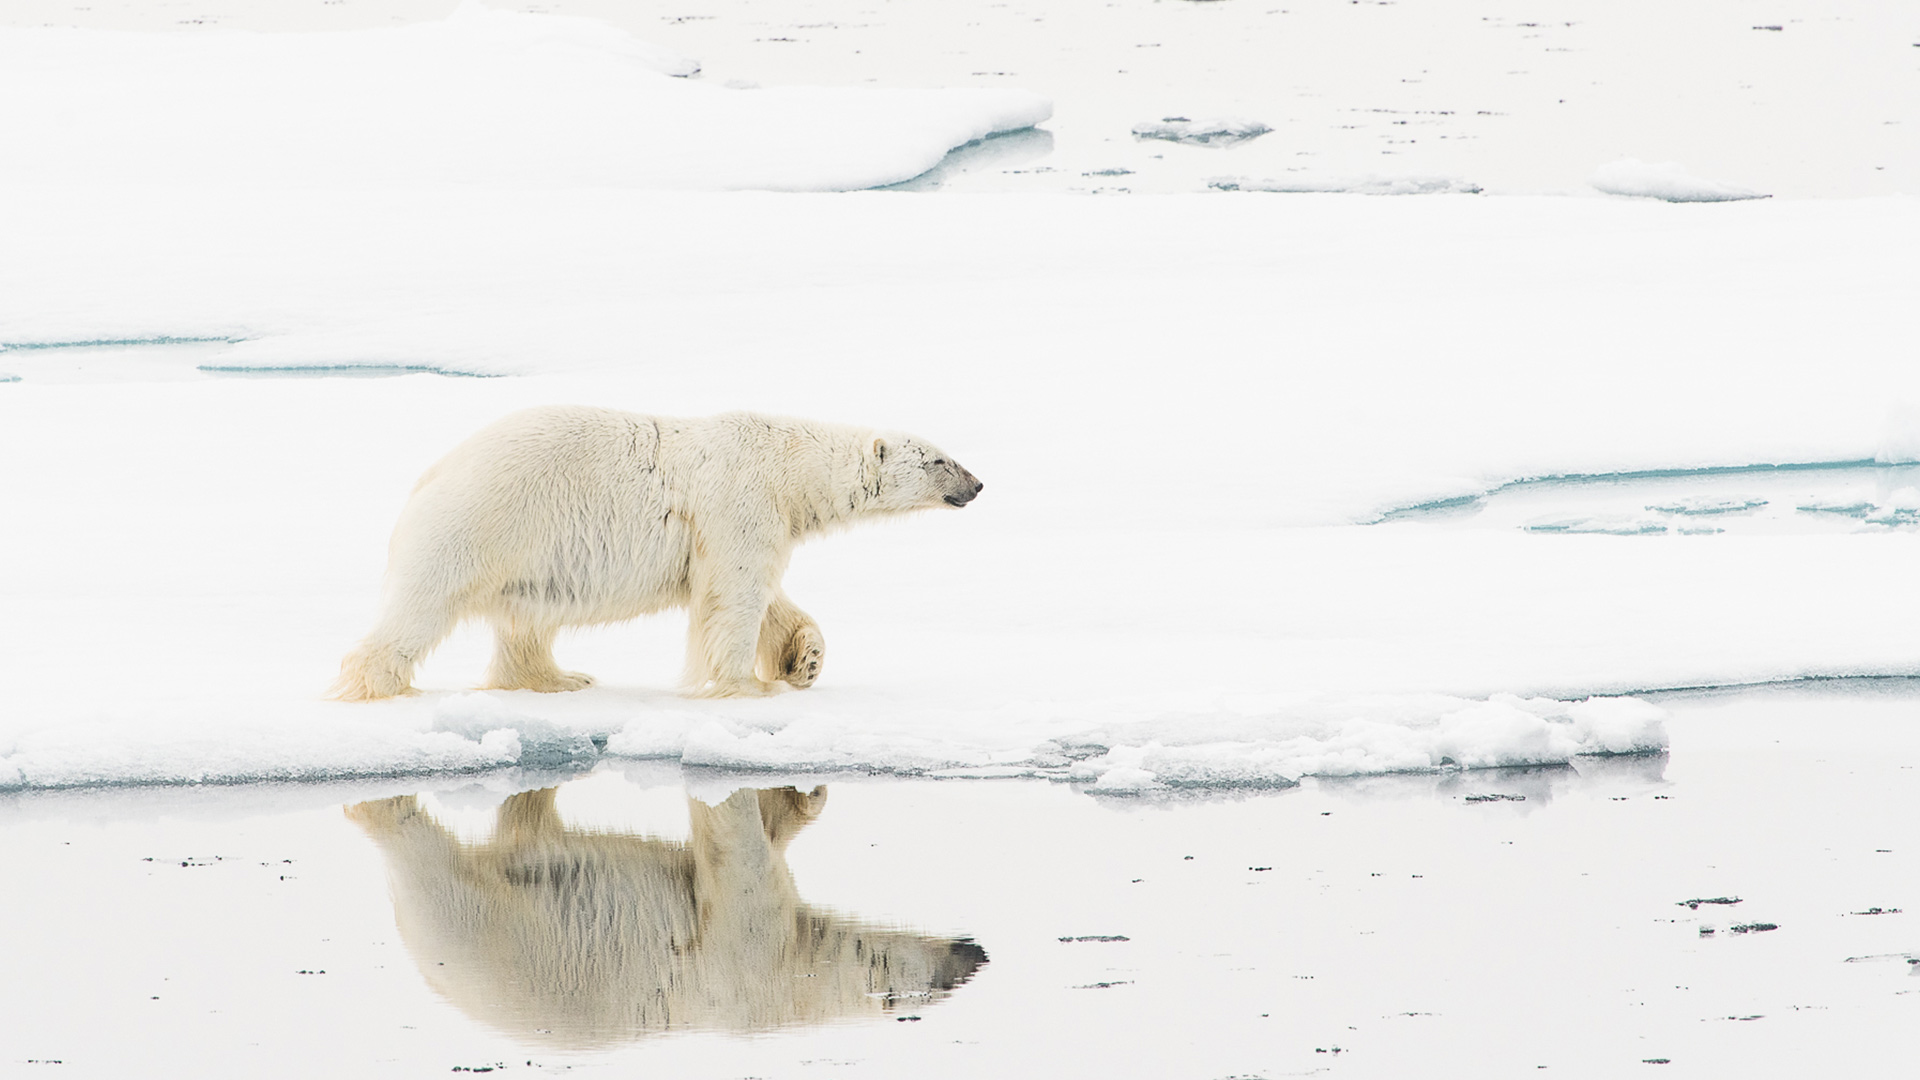 Arctic_AnUnspecifiedRegion_©RoyMangersnes©_wildlifebearspolar-bears____20180810_152621_460_1920x1080_721kB